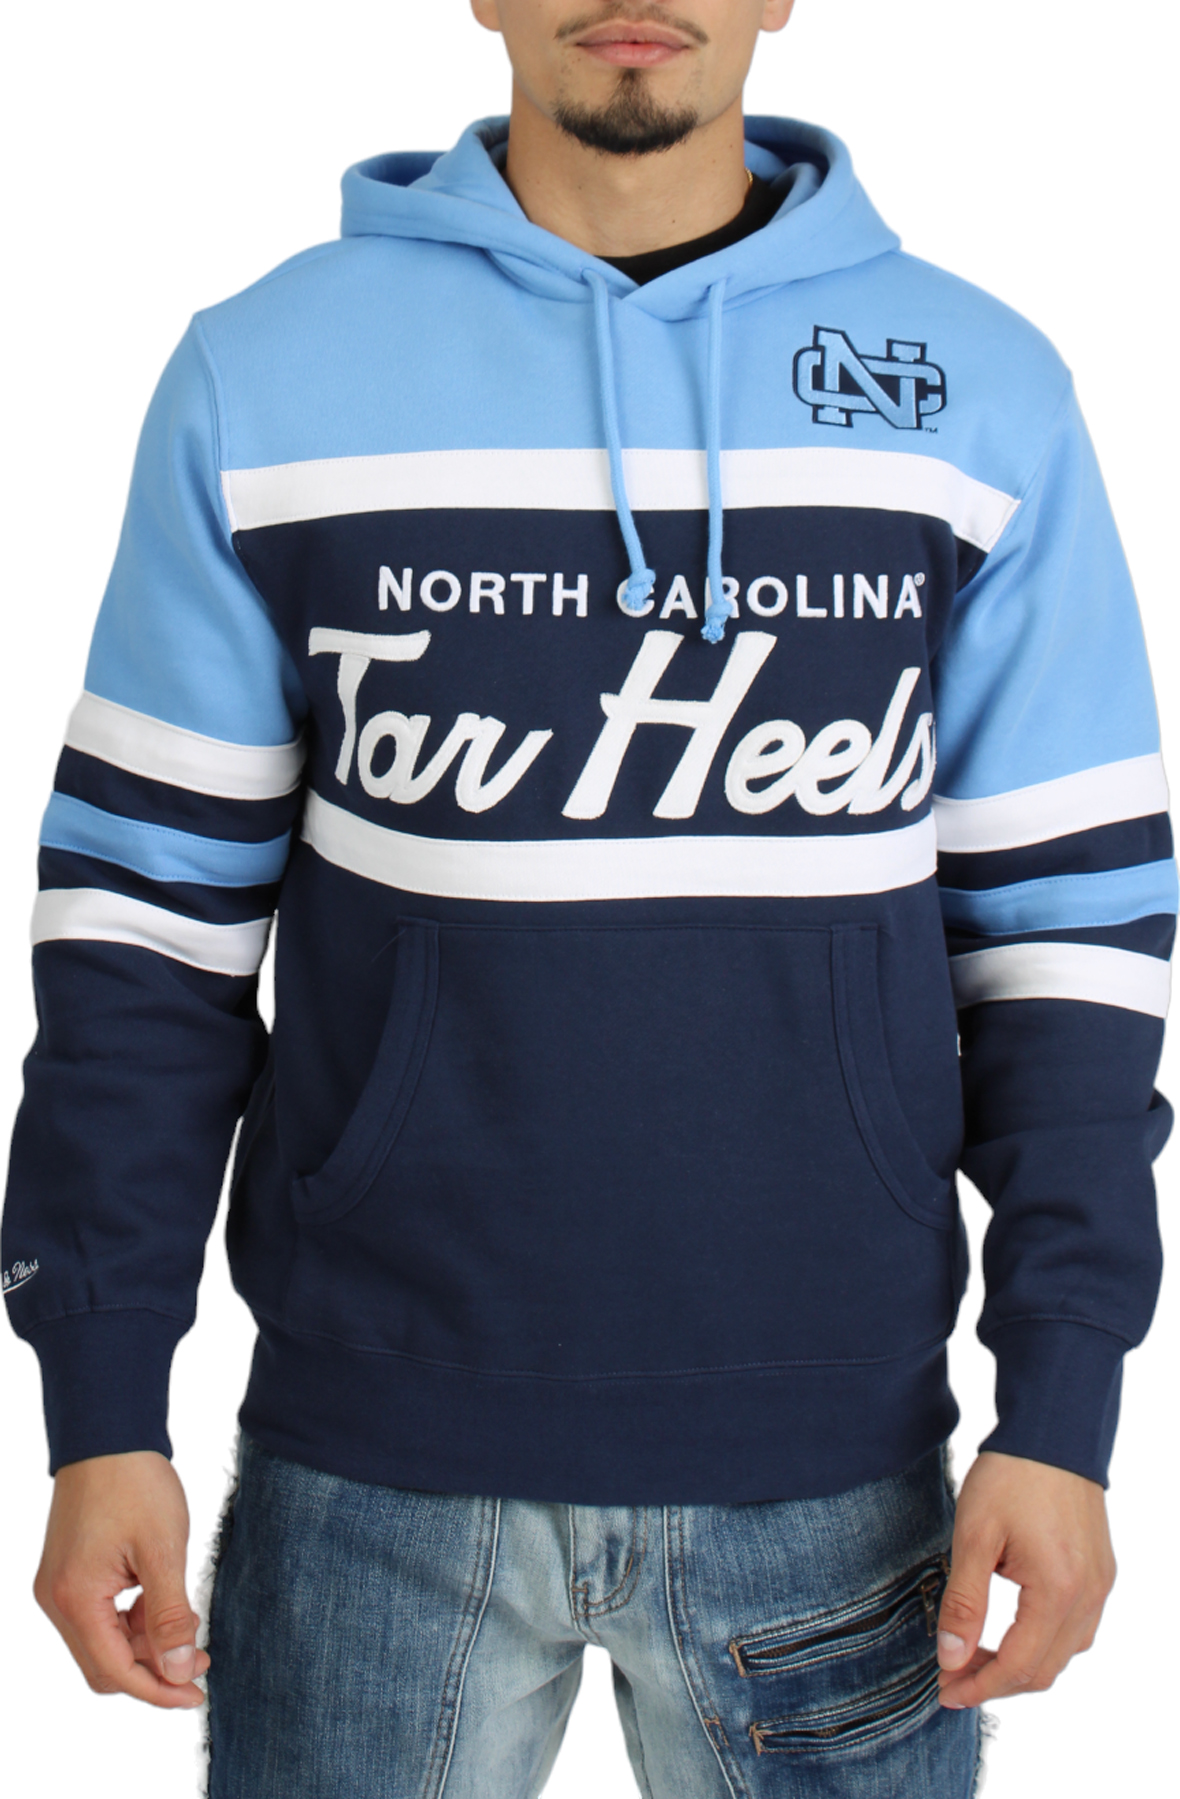 north carolina coach hoodie